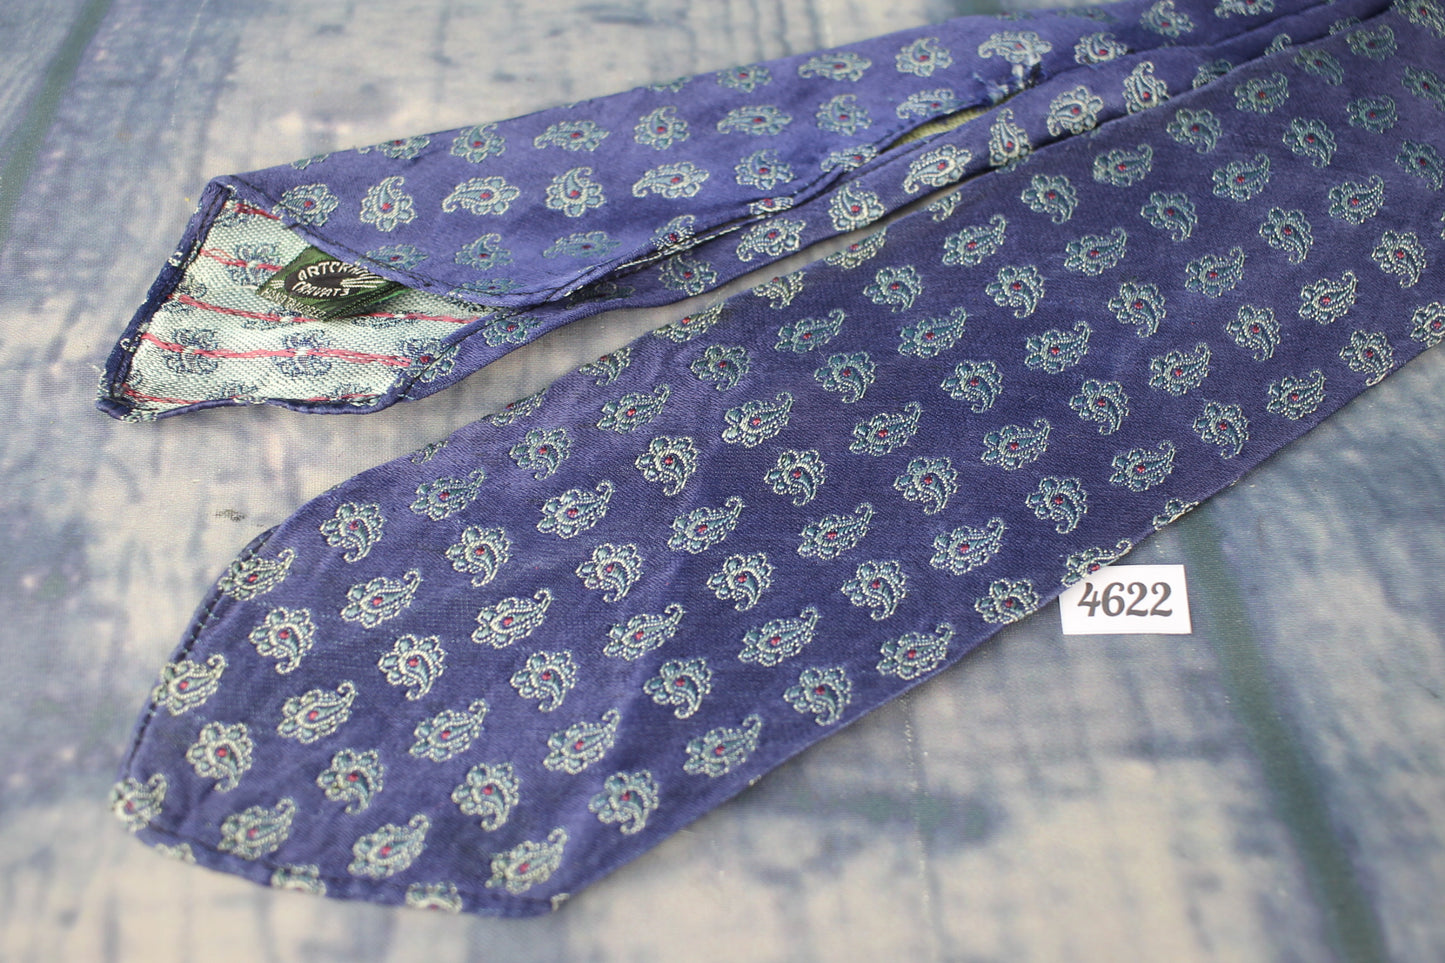 Vintage Artcraft Cravats Hand Tailored Blue Silver Paisley Tie 1940s/50s